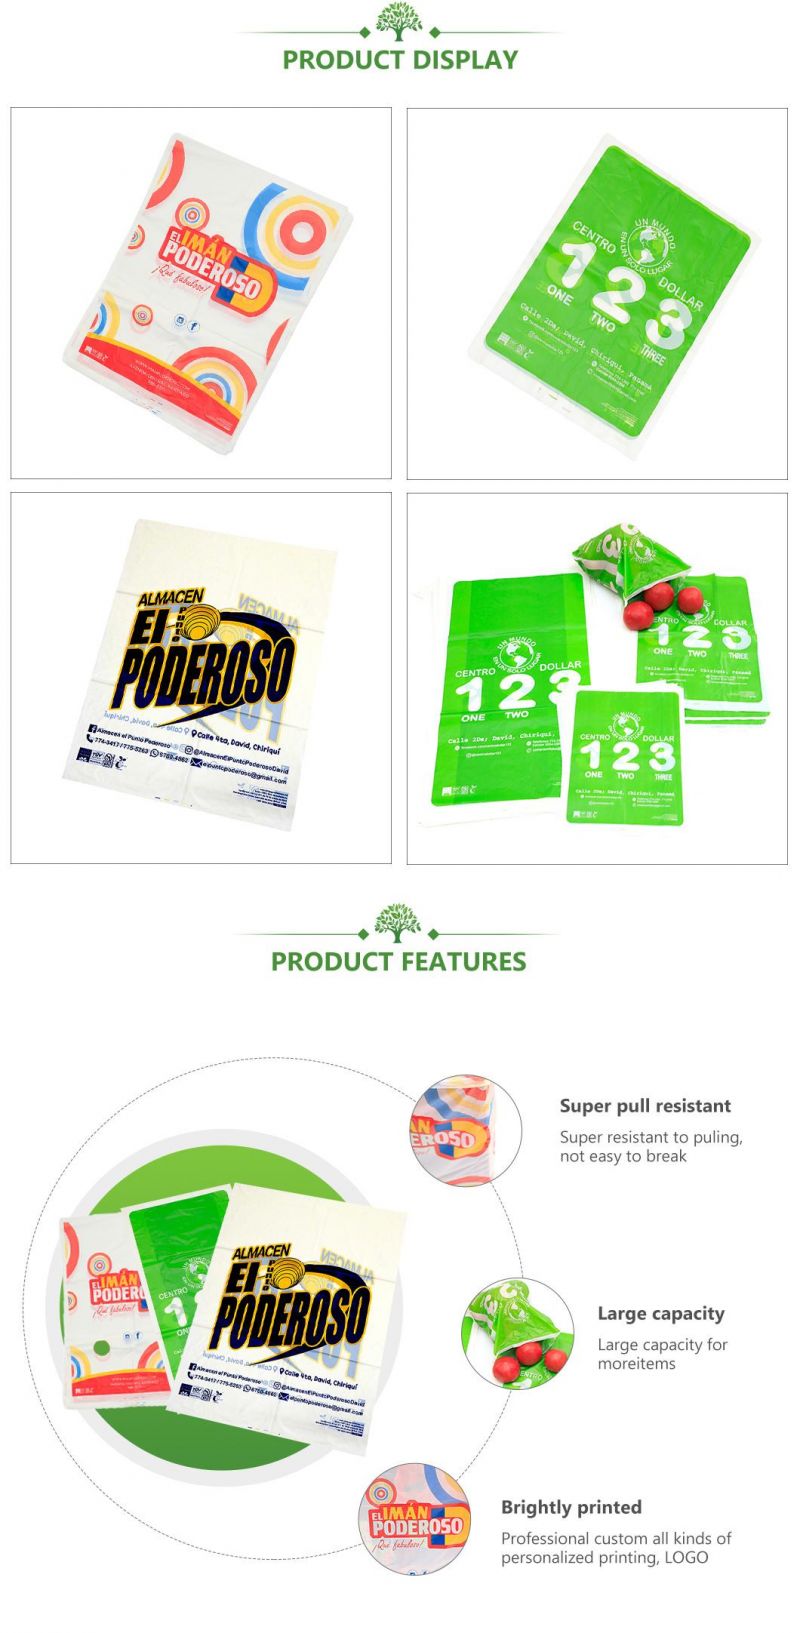 PLA+Pbat/Pbat+Corn Starch Biodegradable Bags, Compostable Bags, Food Bags for Hospital